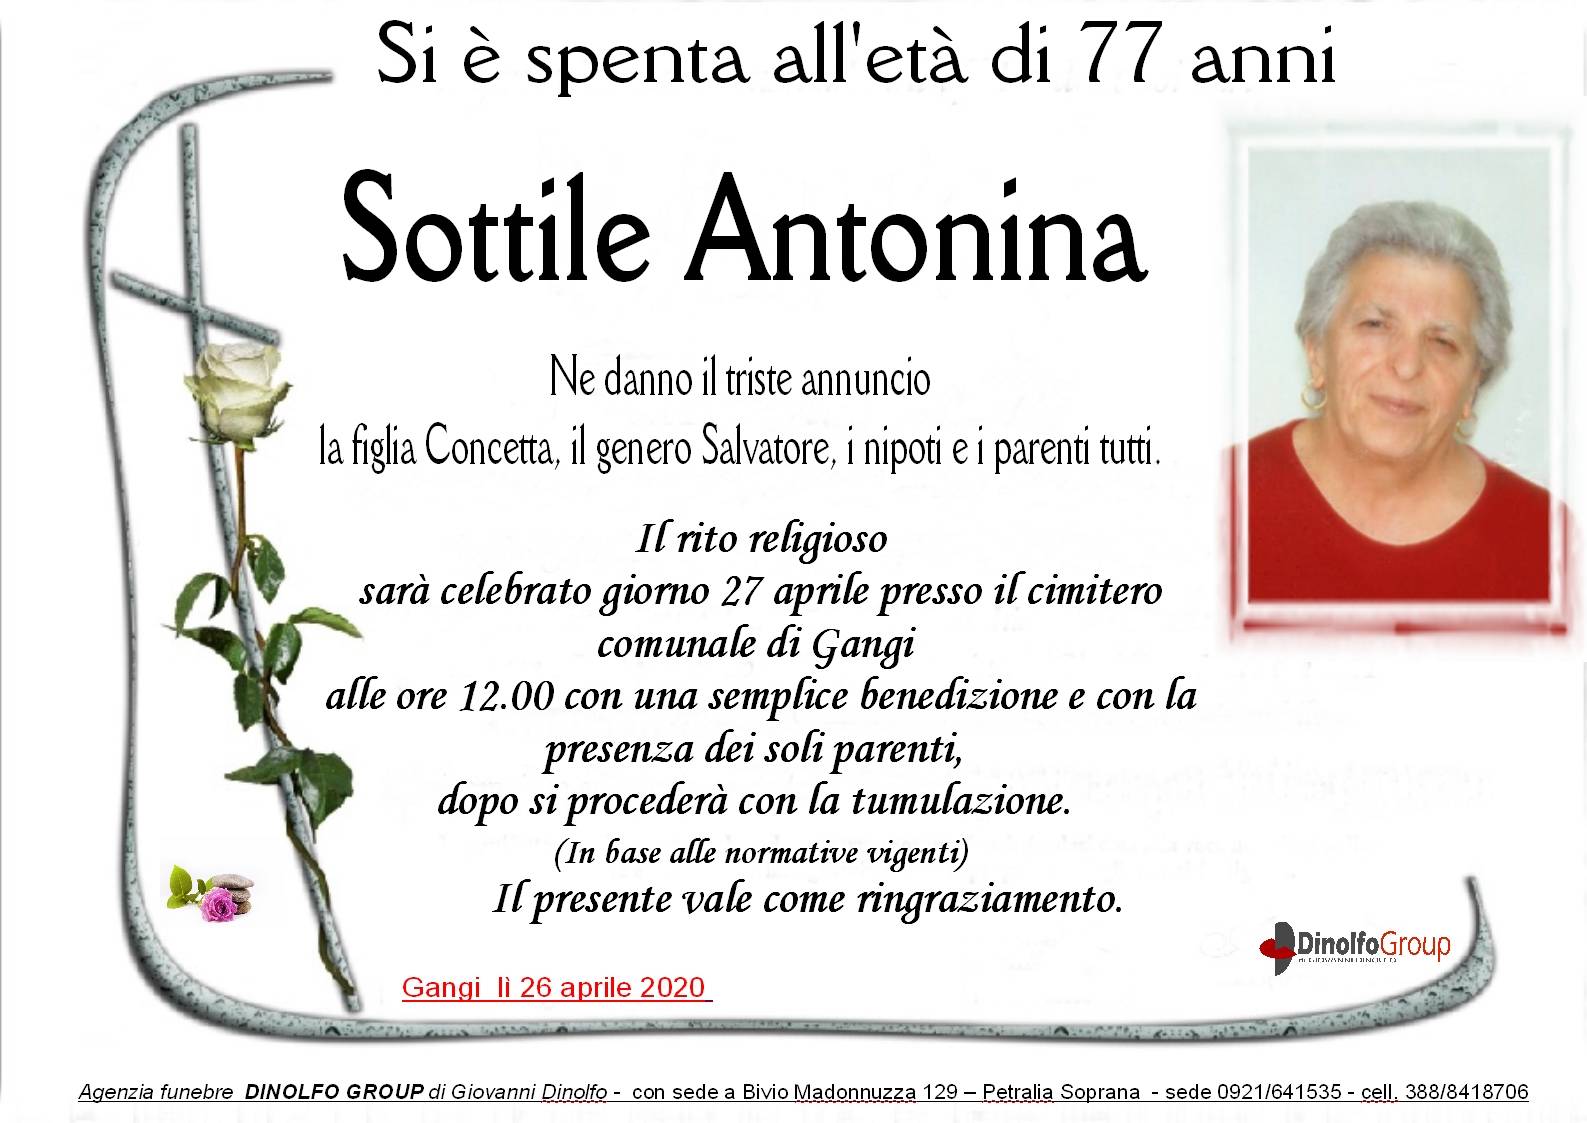 Antonina Sottile